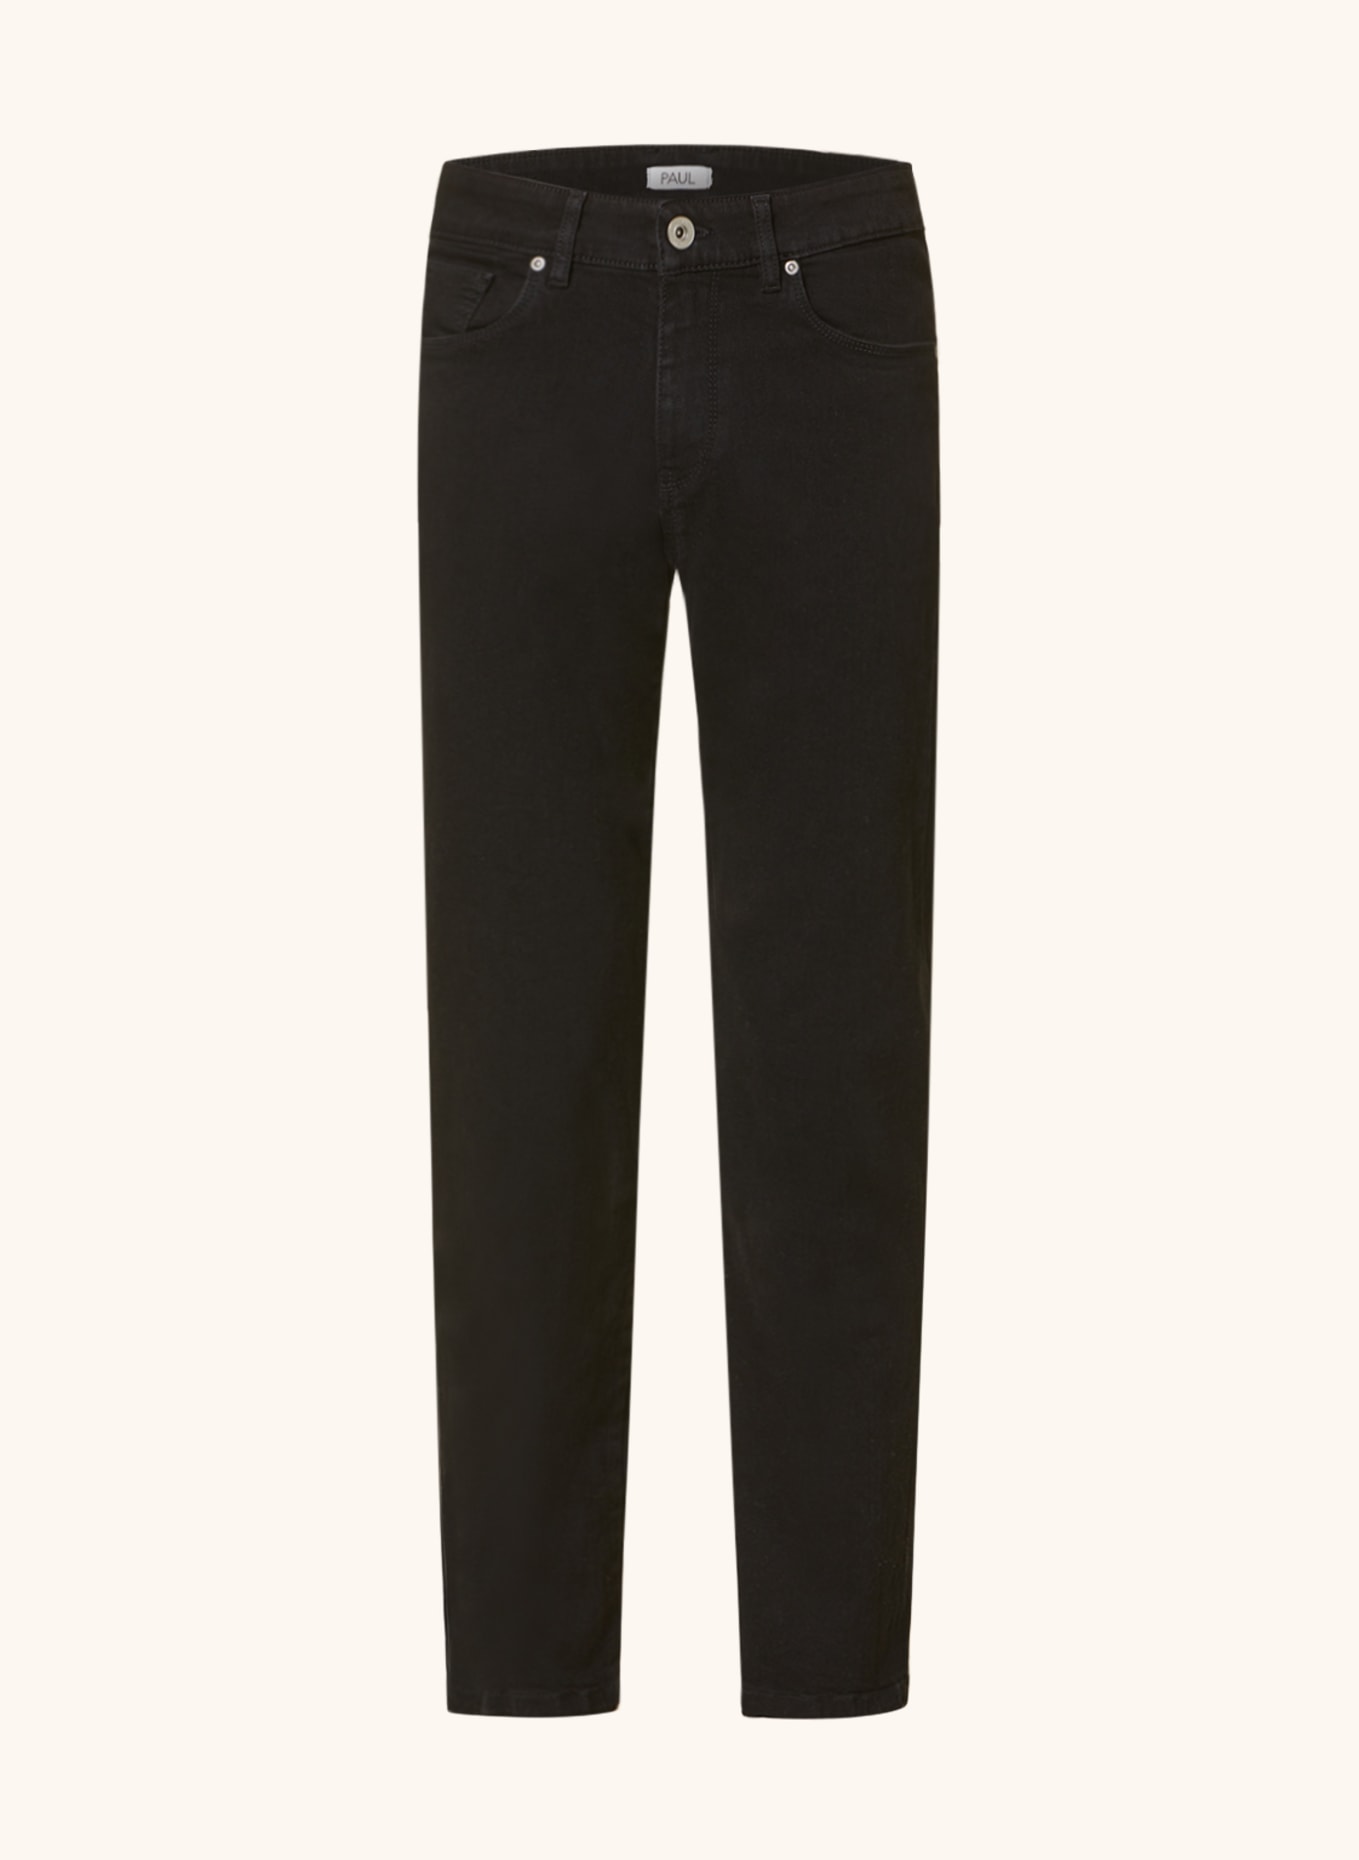 PAUL Jeans Slim Fit, Farbe: 6004 black/ black unused(Bild null)